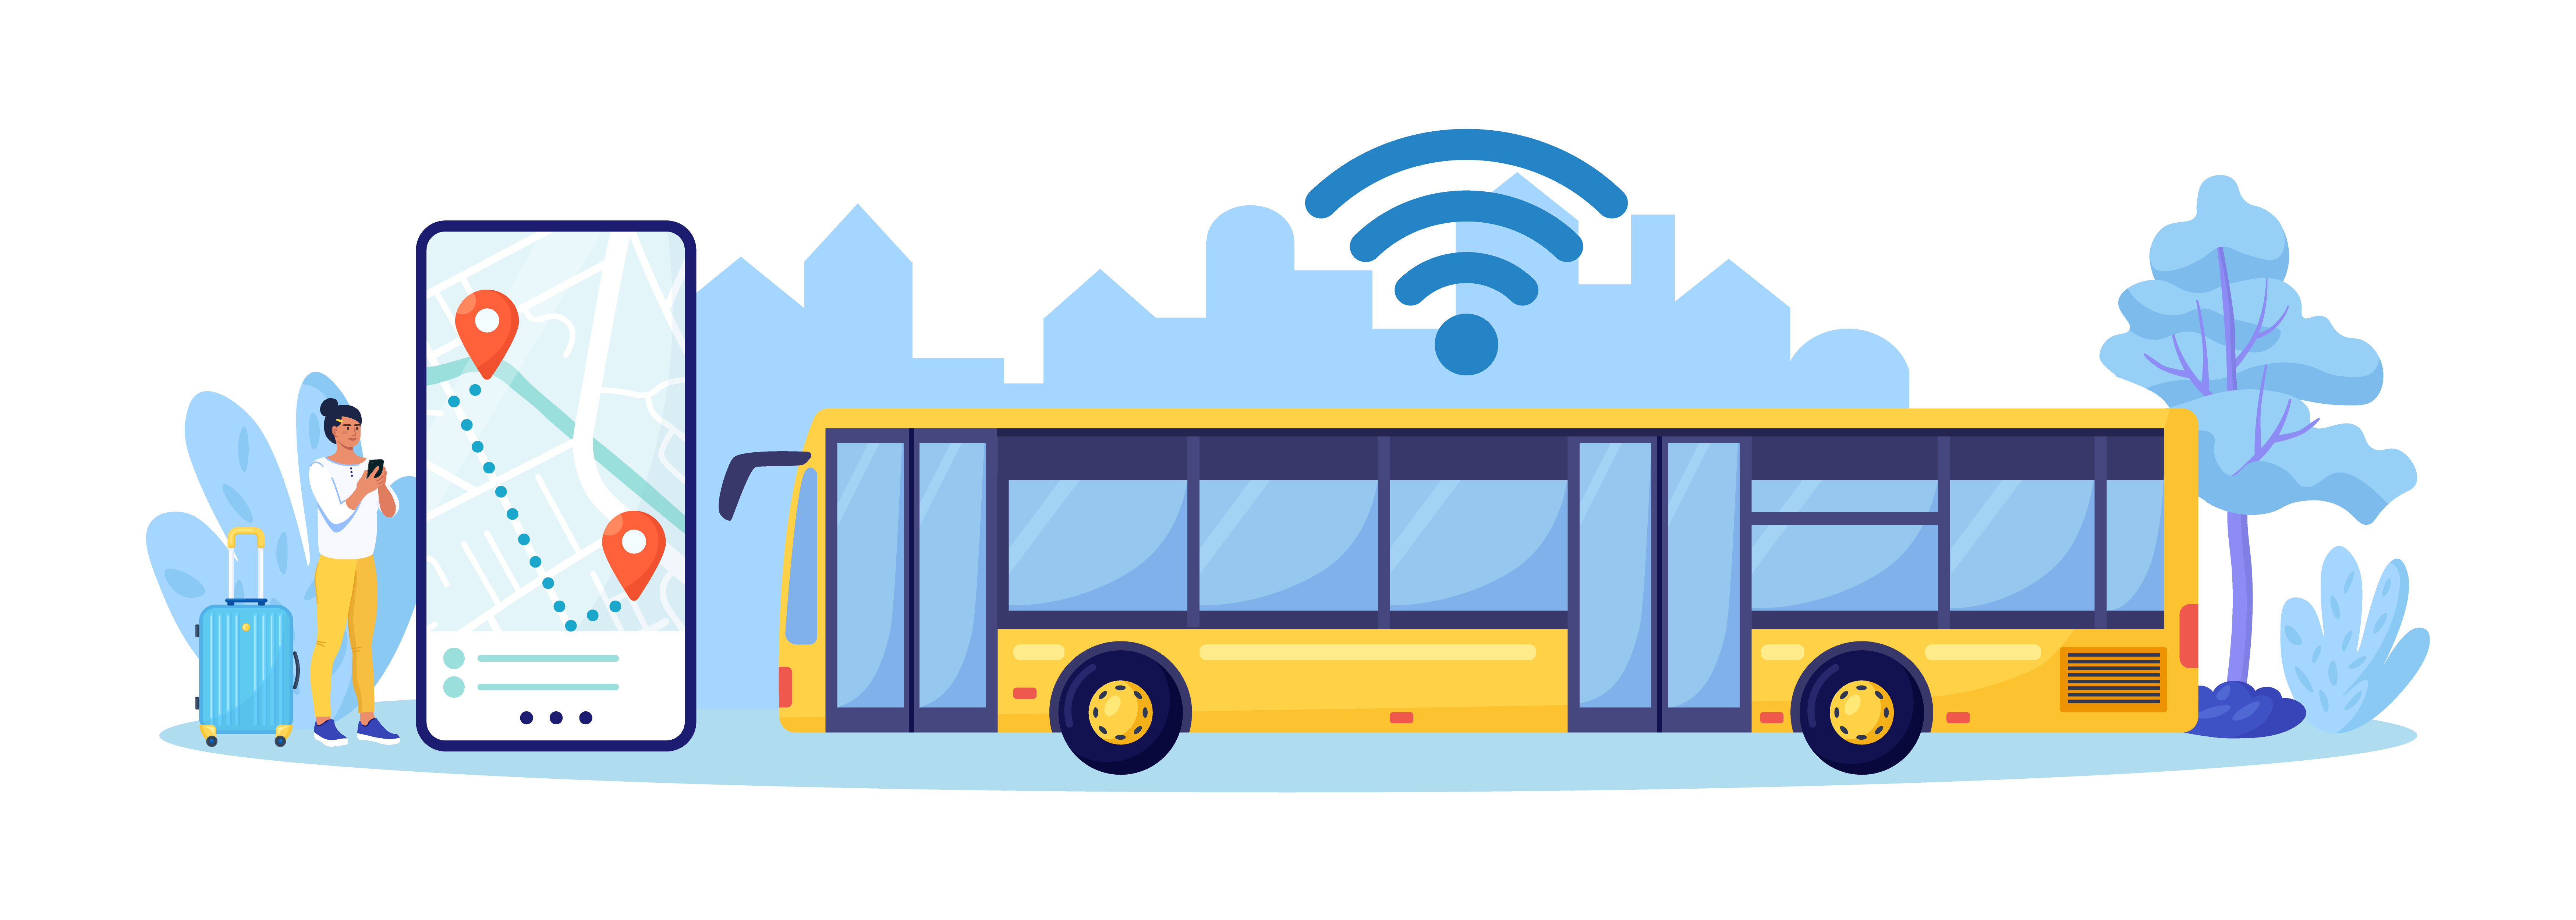 bus wi-fi illustration  - Datavalet